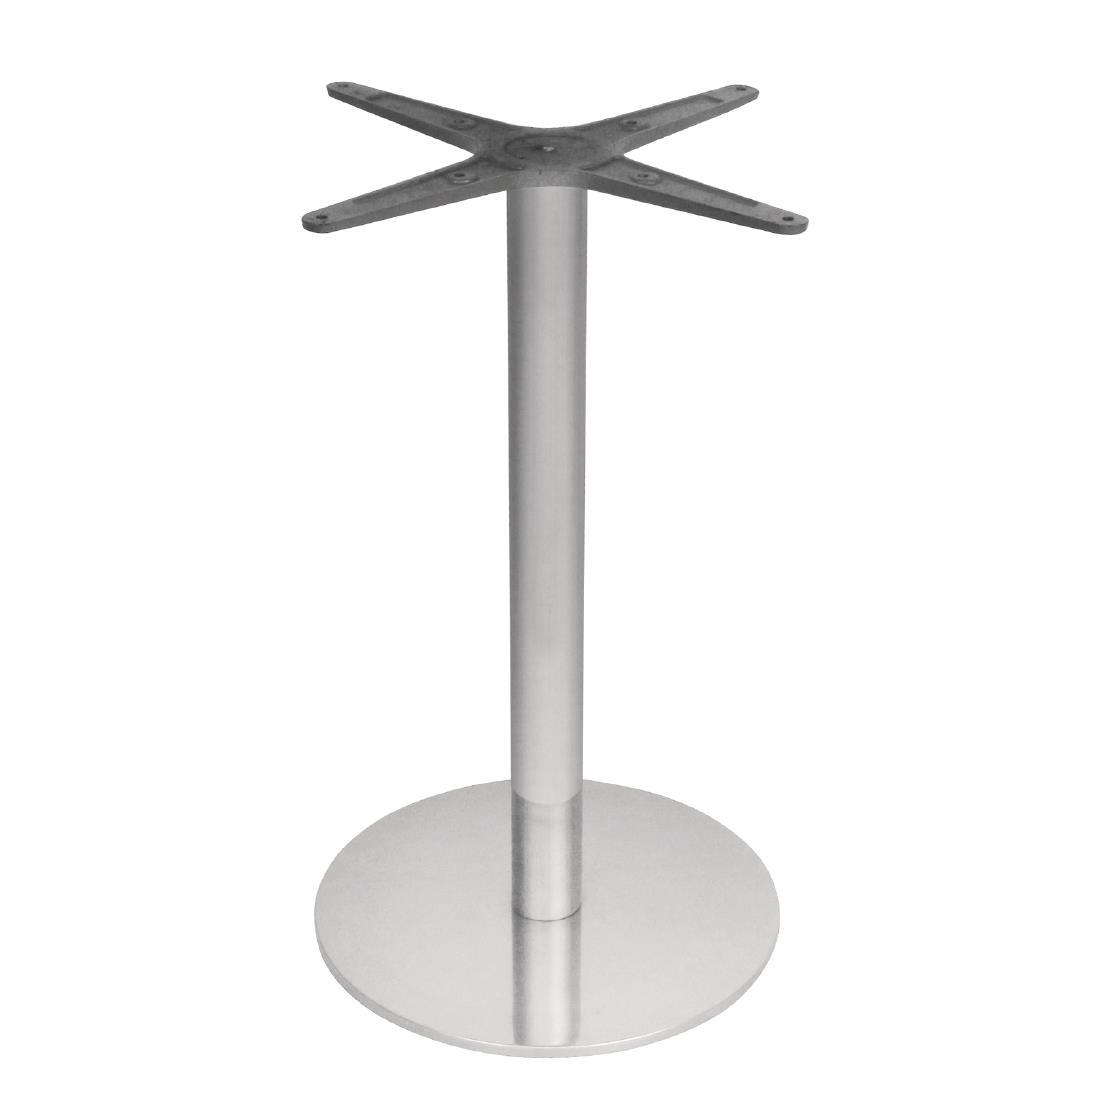 Bolero Stainless Steel Round Table Base - GK992  - 1